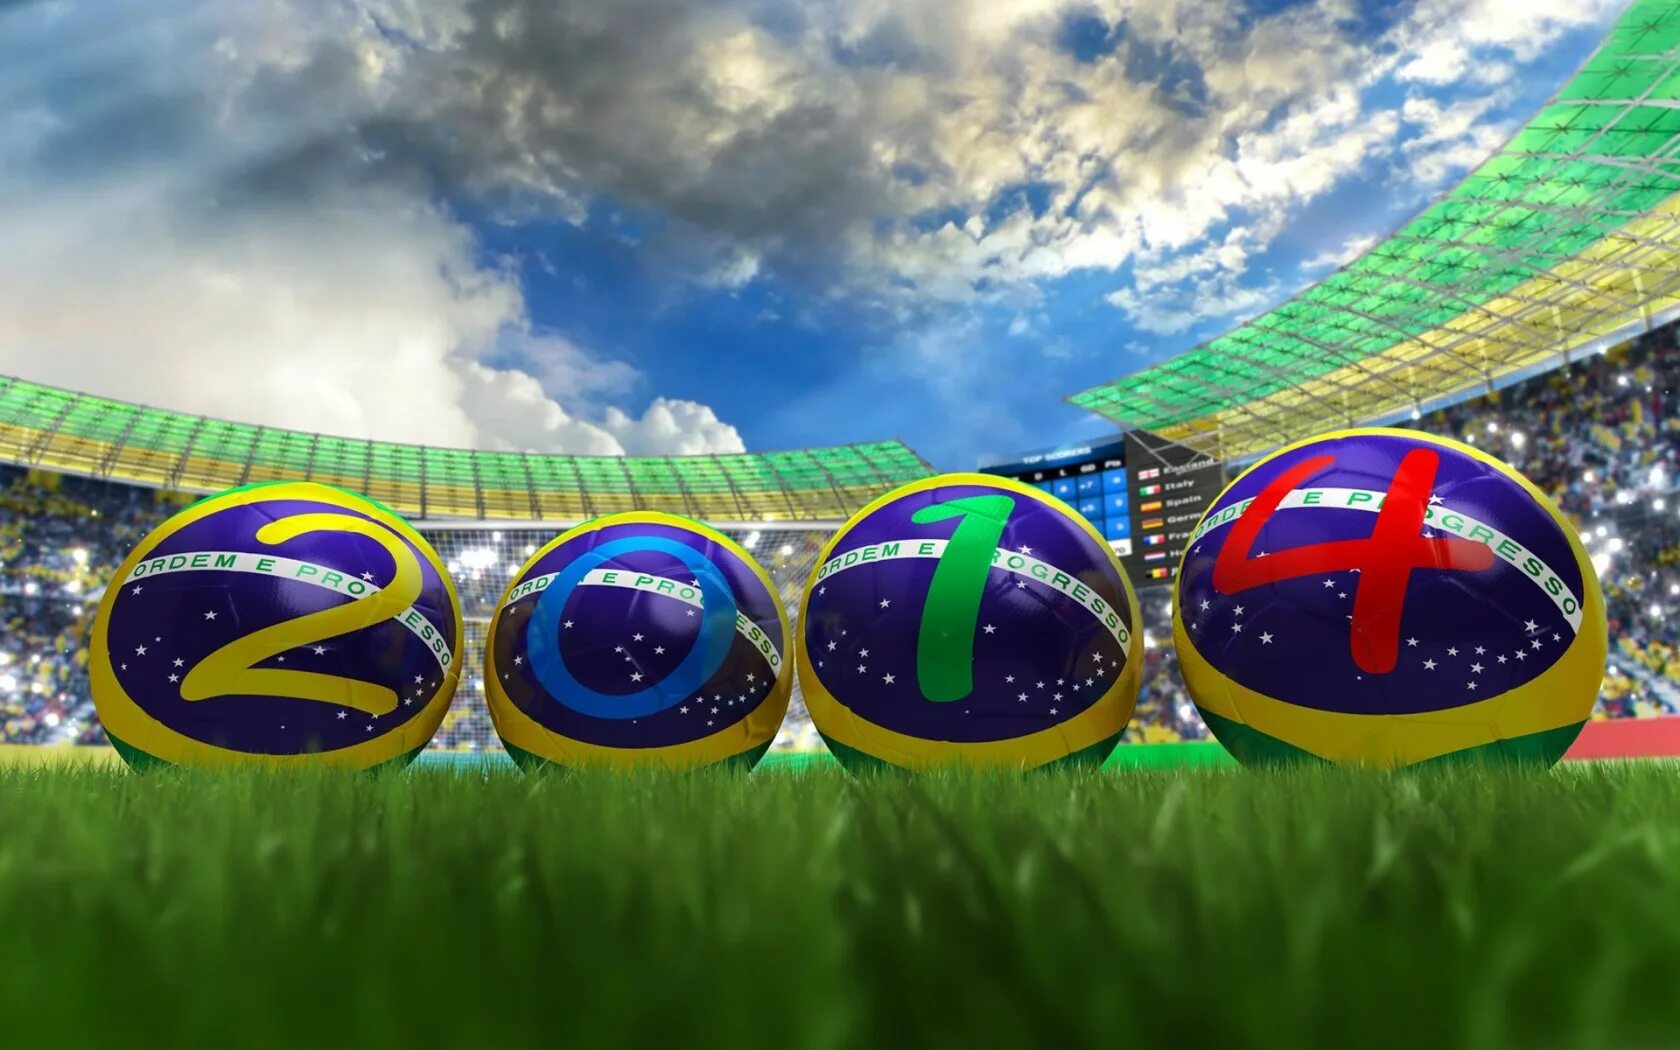 Fifa brazil. Мяч ЧМ Бразилия 2014. The World Cup 2014 Brazil мяч.